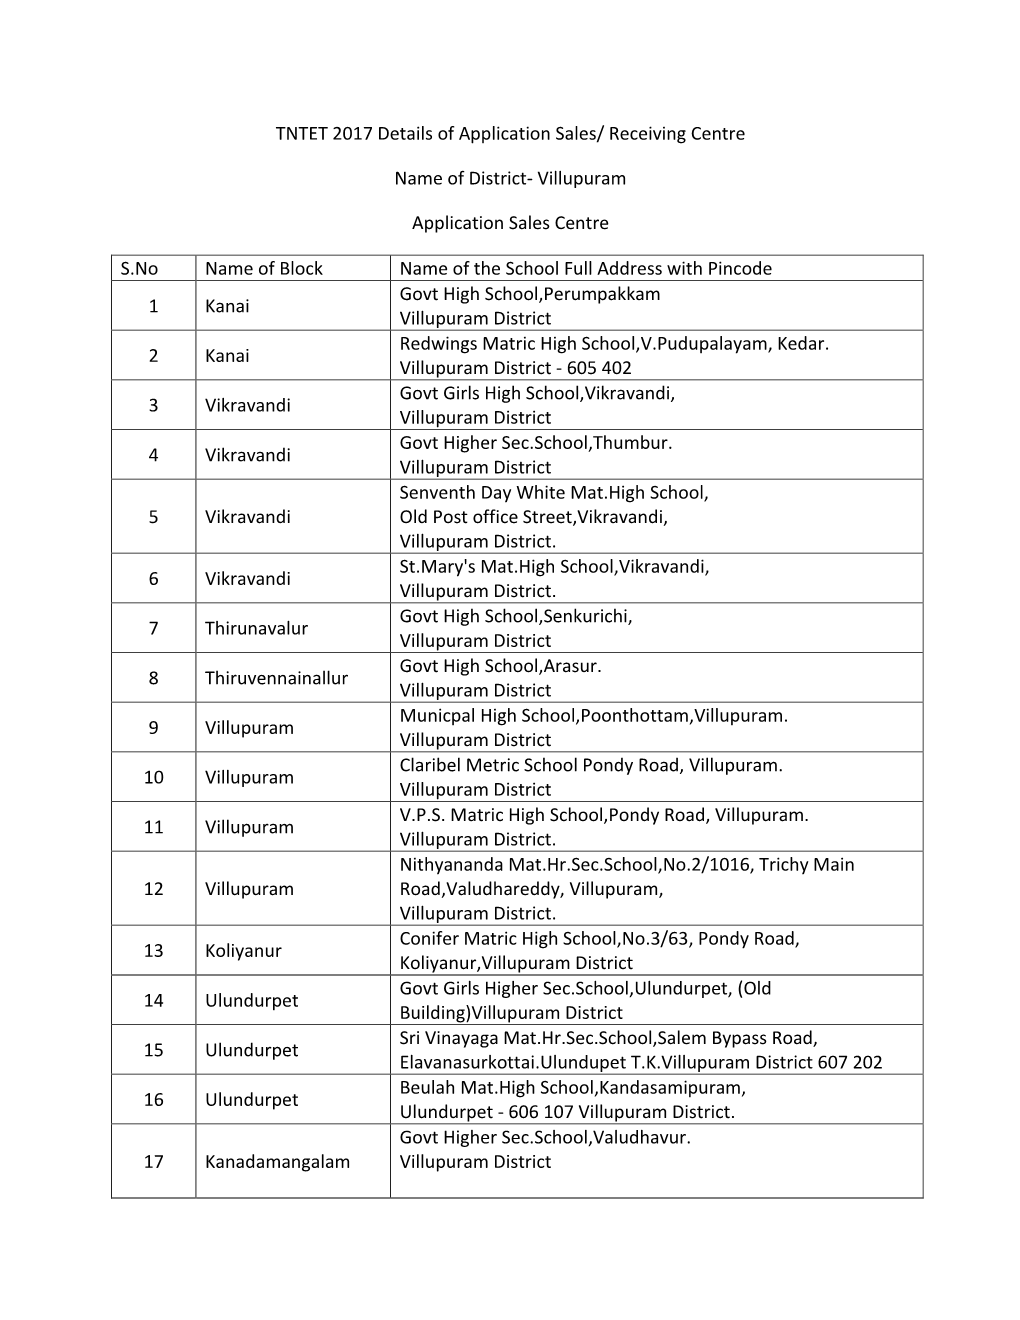 Receiving Centre Name of District- Villupuram Application Sales